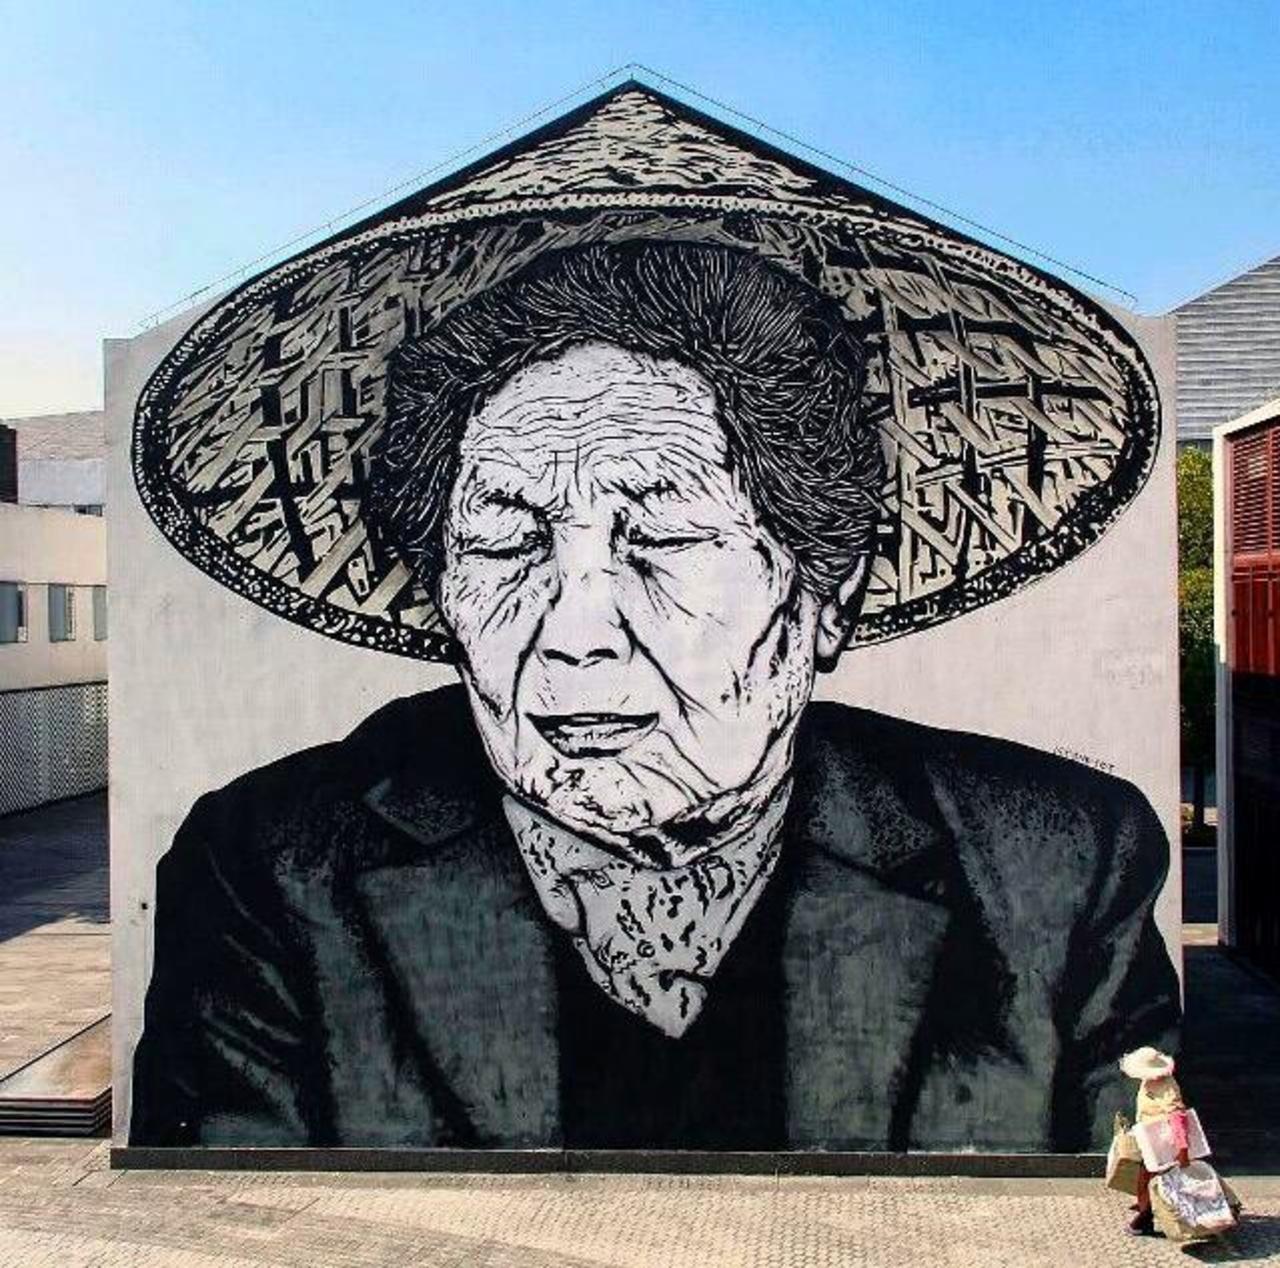 New Street Art by icy&sot in Shanghai  

#art #graffiti #mural #streetart http://t.co/KzI2OZuGoH